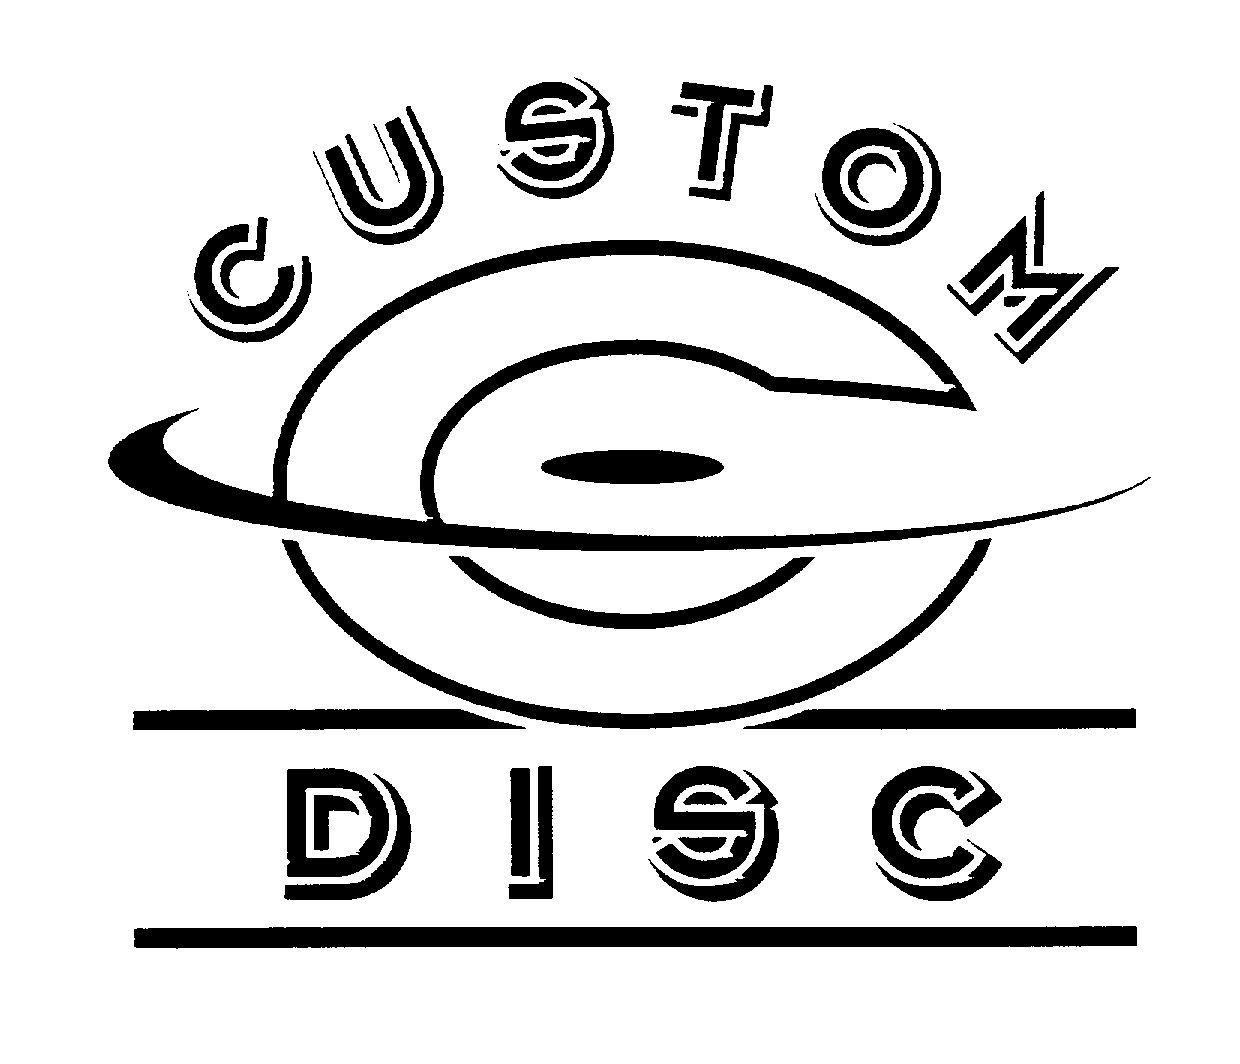  C CUSTOM DISC